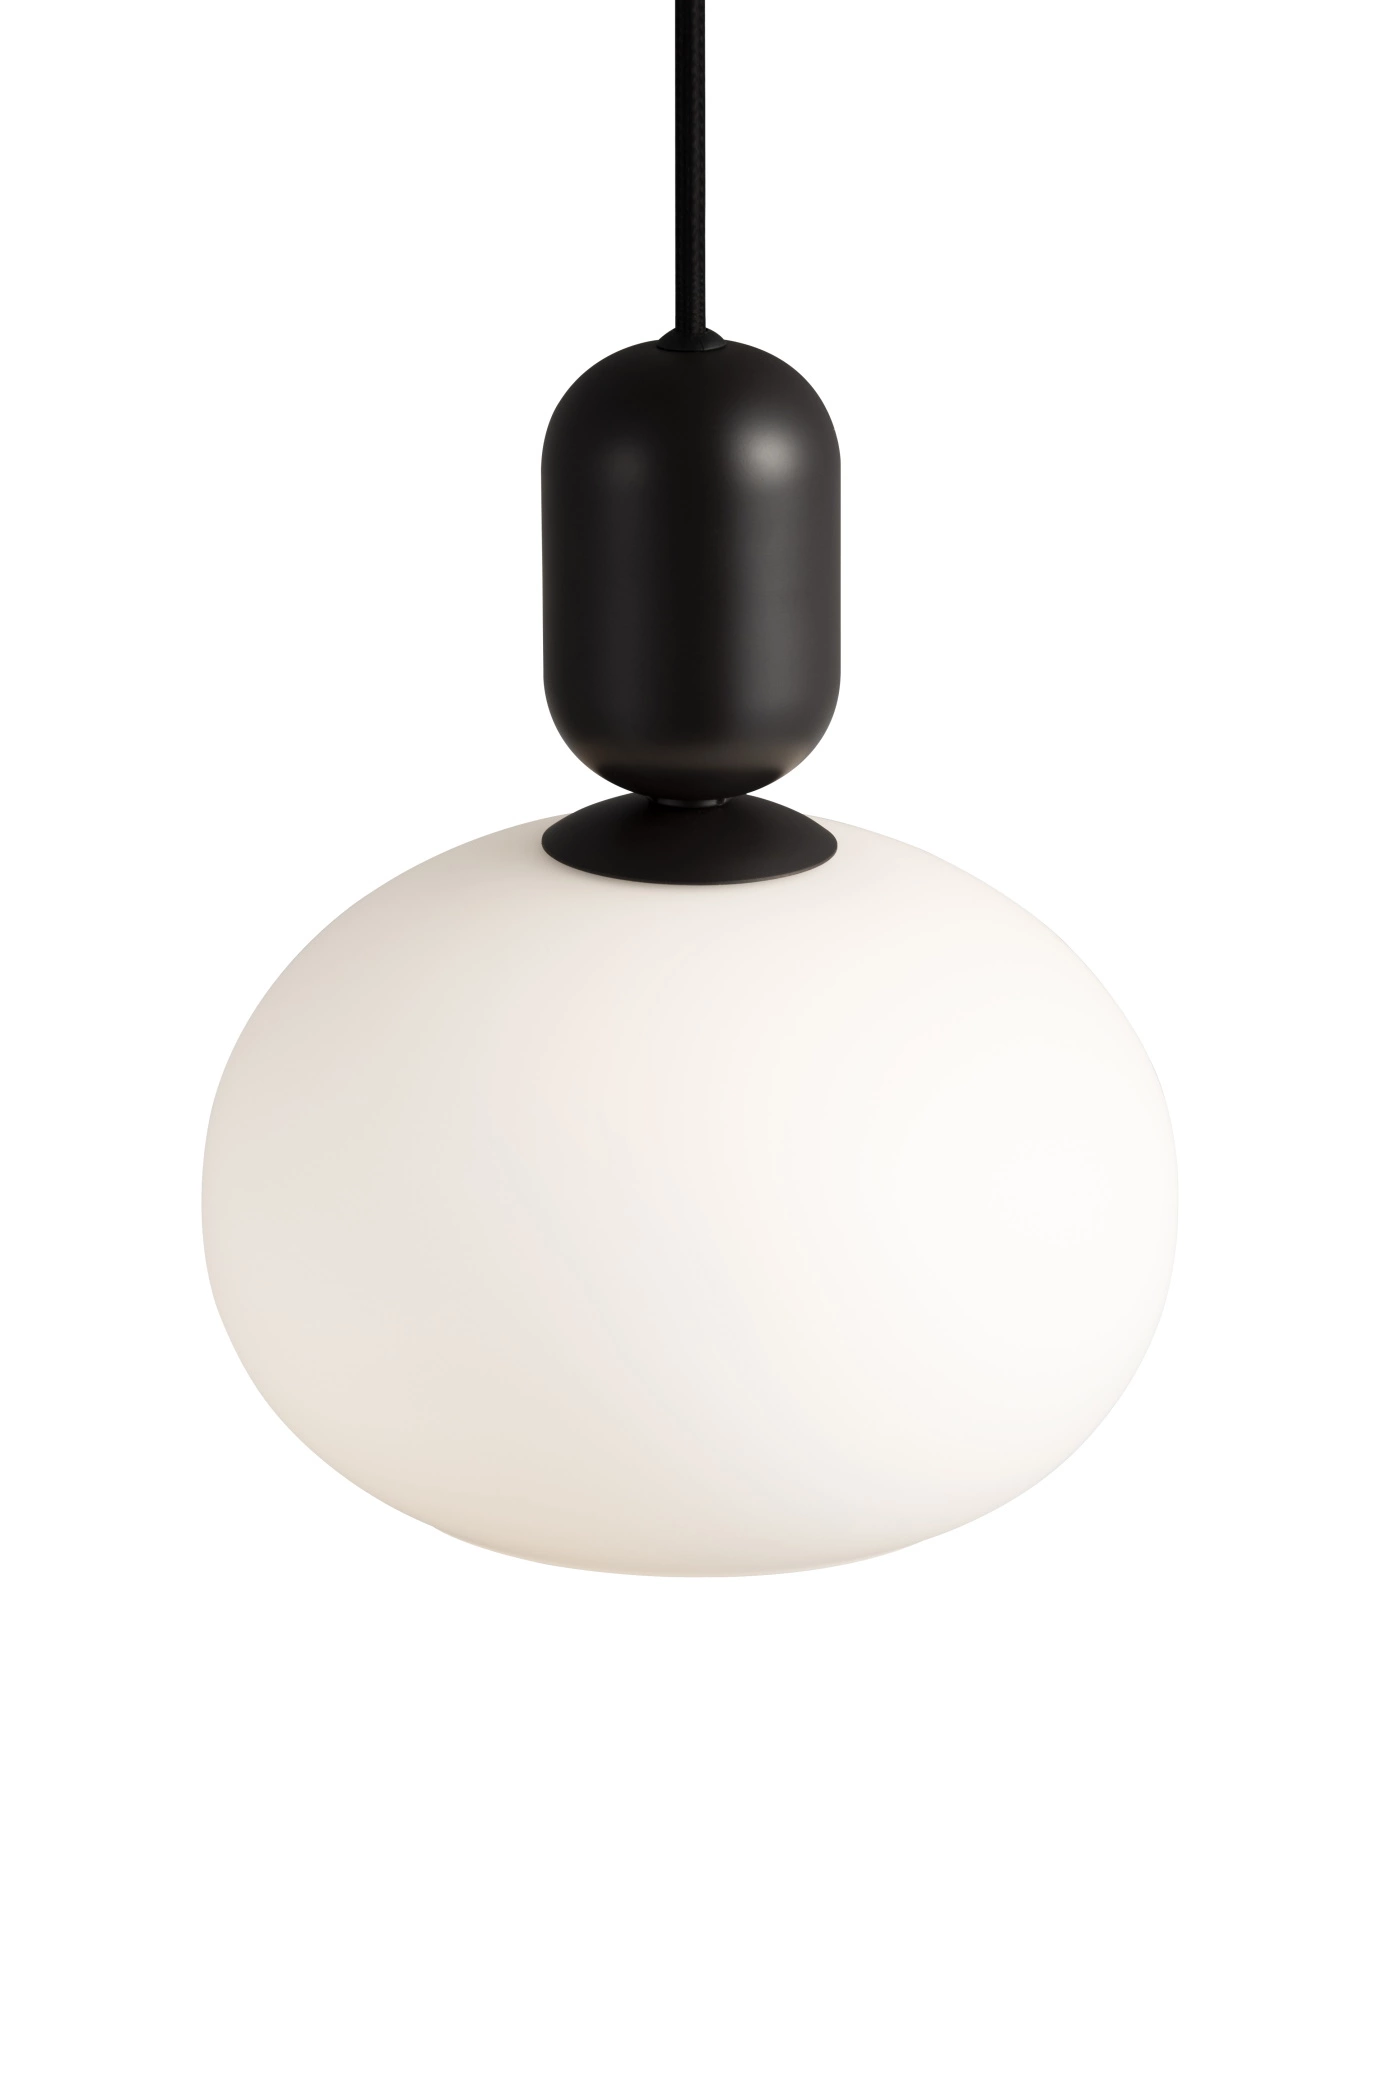   
                        
                        Люстра NORDLUX (Дания) 12590    
                         в стиле Модерн.  
                        Тип источника света: светодиодная лампа, сменная.                         Форма: Шар.                         Цвета плафонов и подвесок: Белый.                         Материал: Стекло.                          фото 3